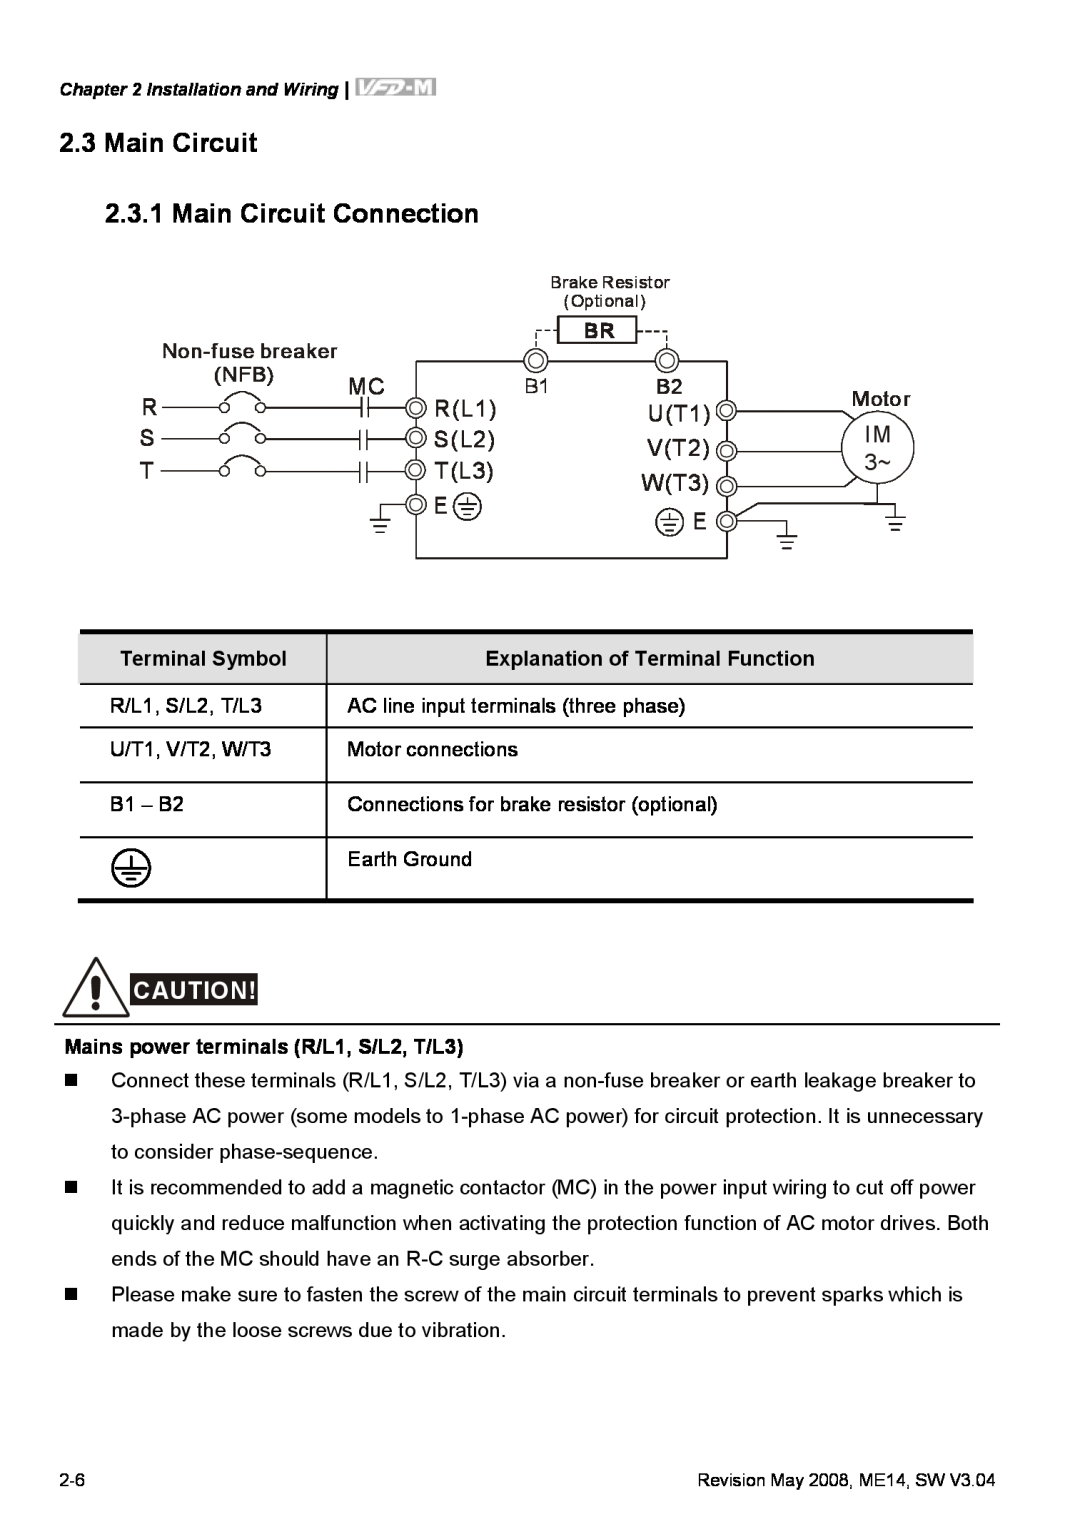 Delta Electronics VFD-M manual Main Circuit 2.3.1 Main Circuit Connection 